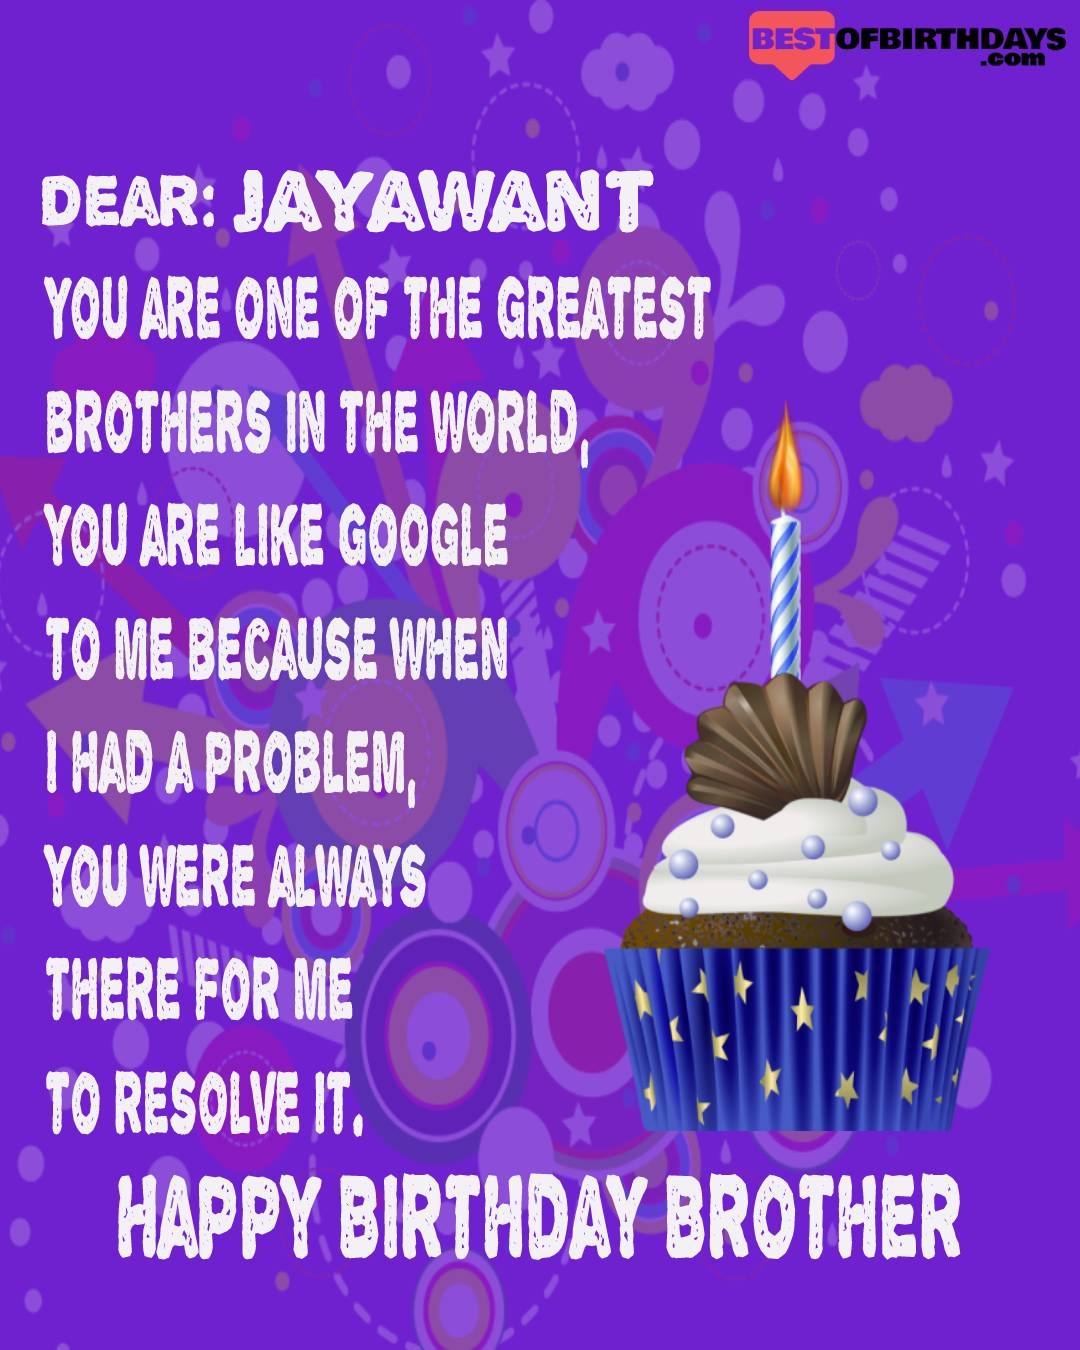 Happy birthday jayawant bhai brother bro